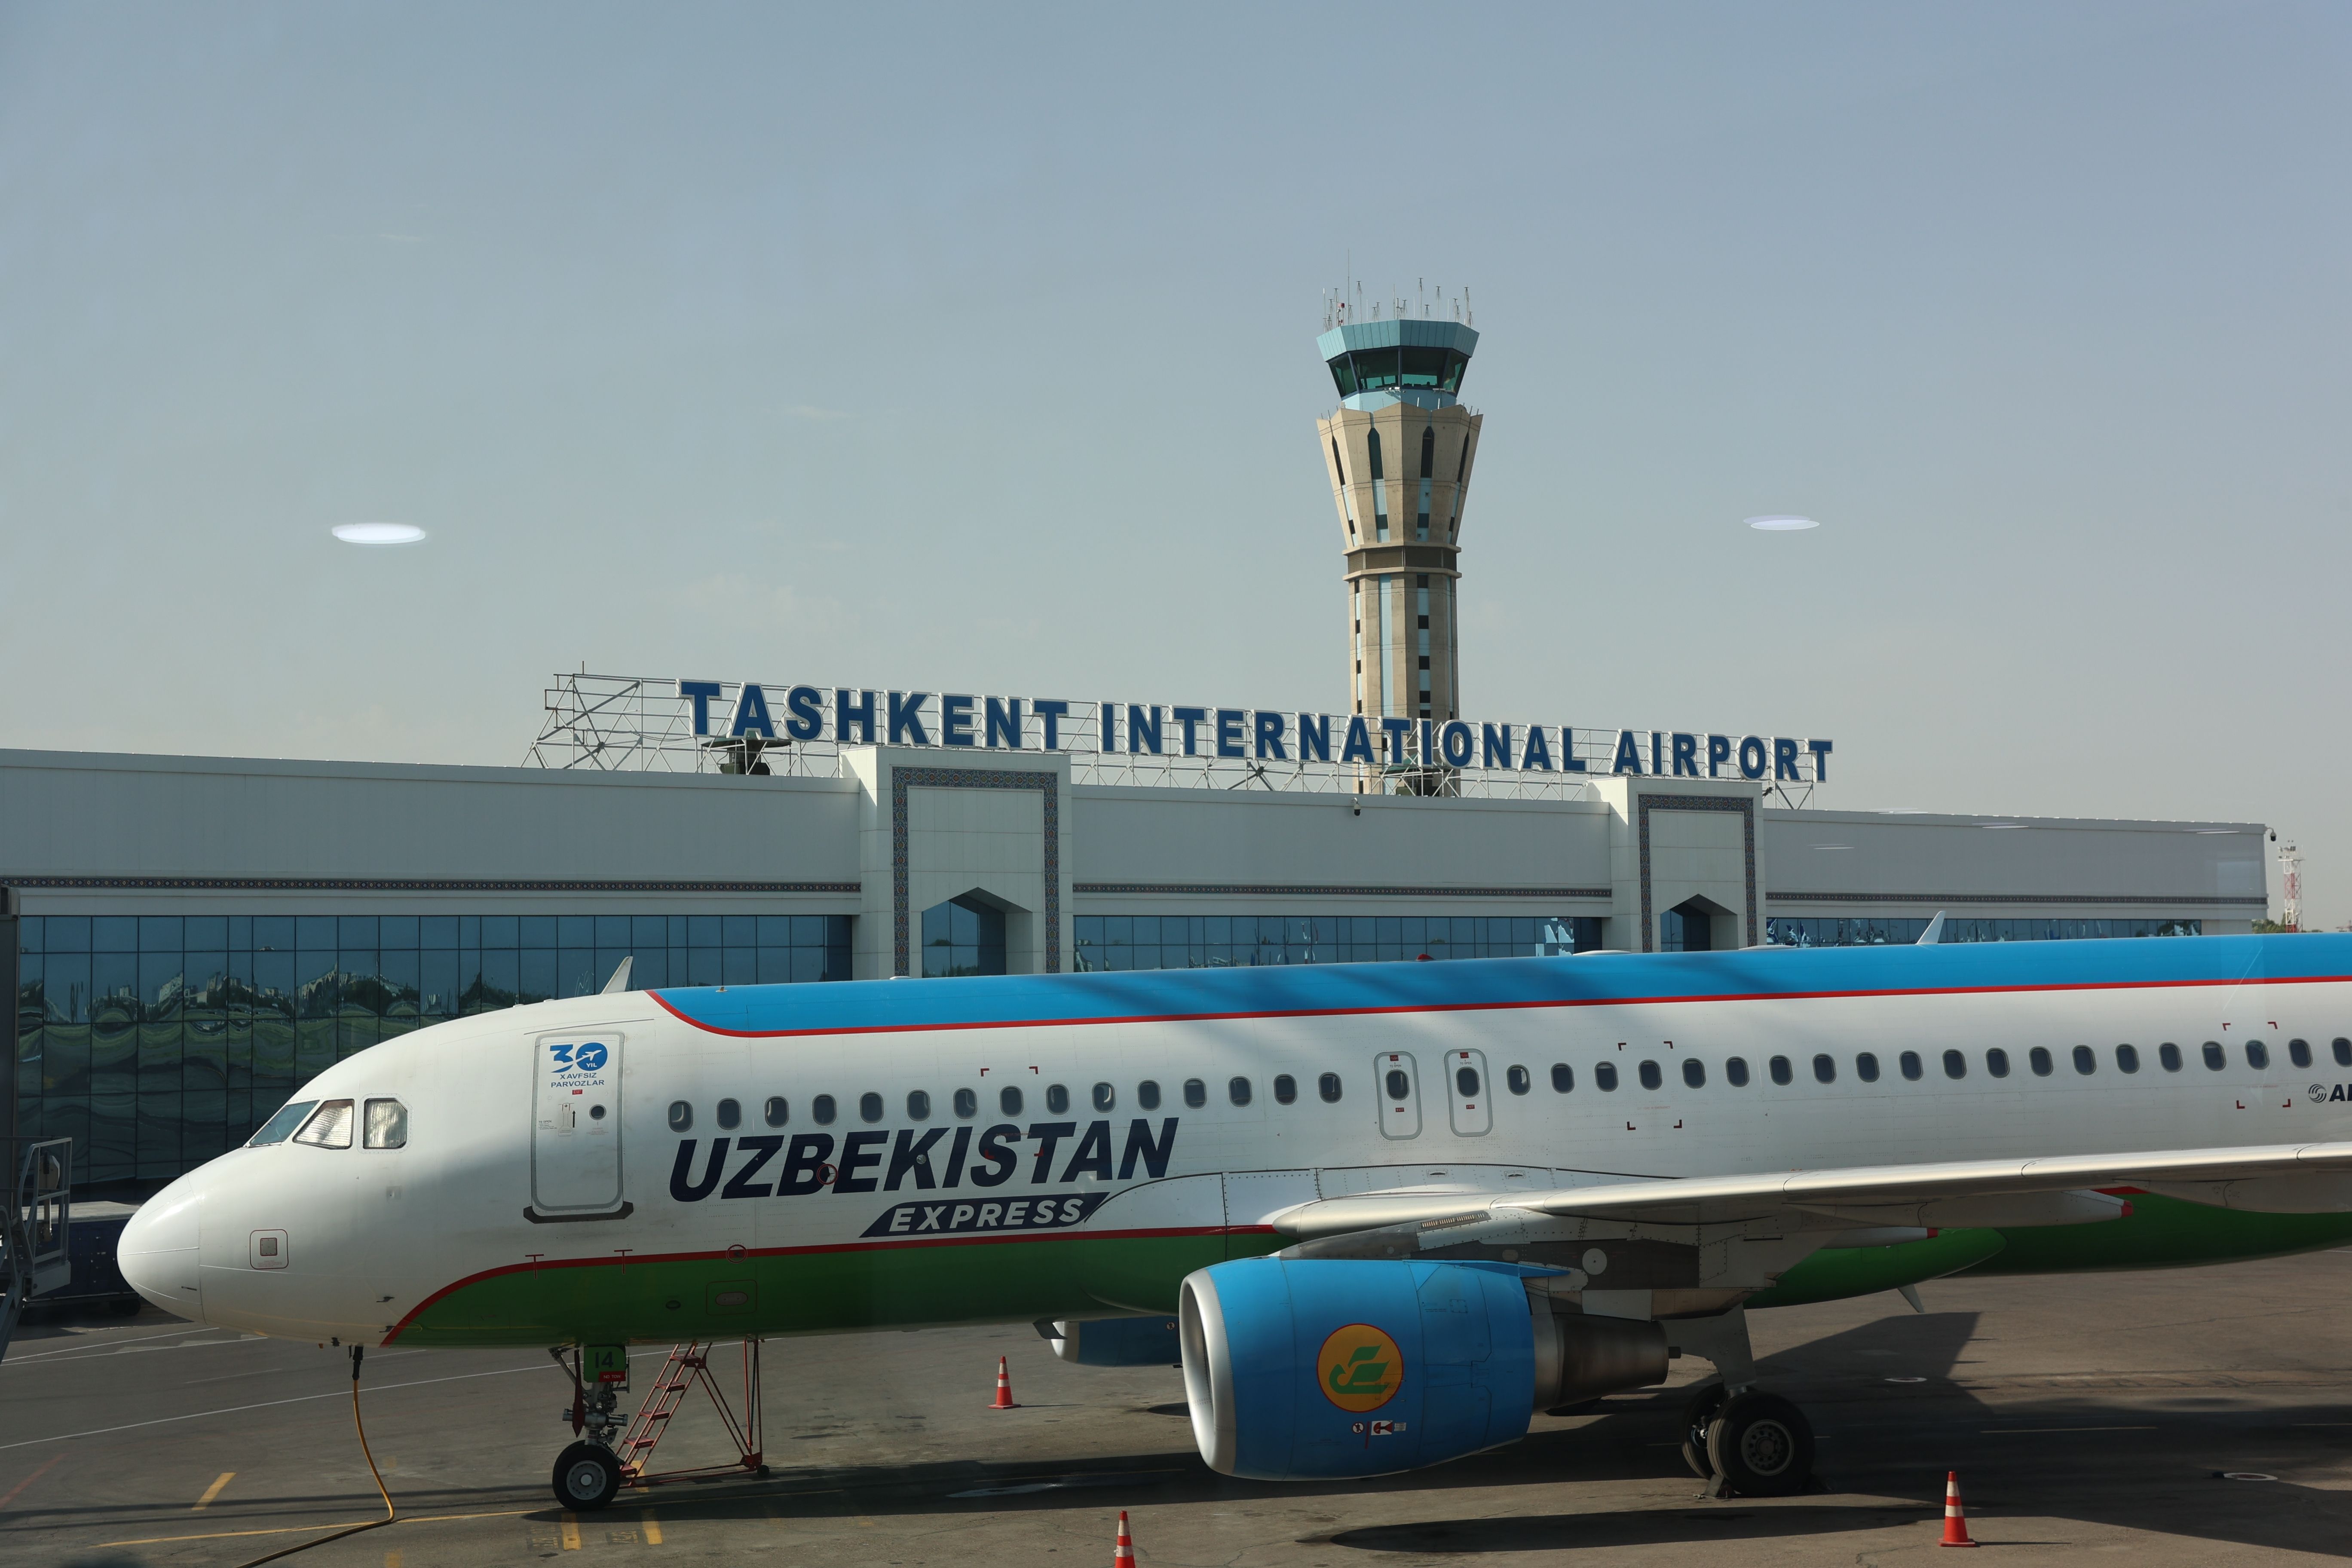 Uzbekistan Express @ Tashkent International Airport